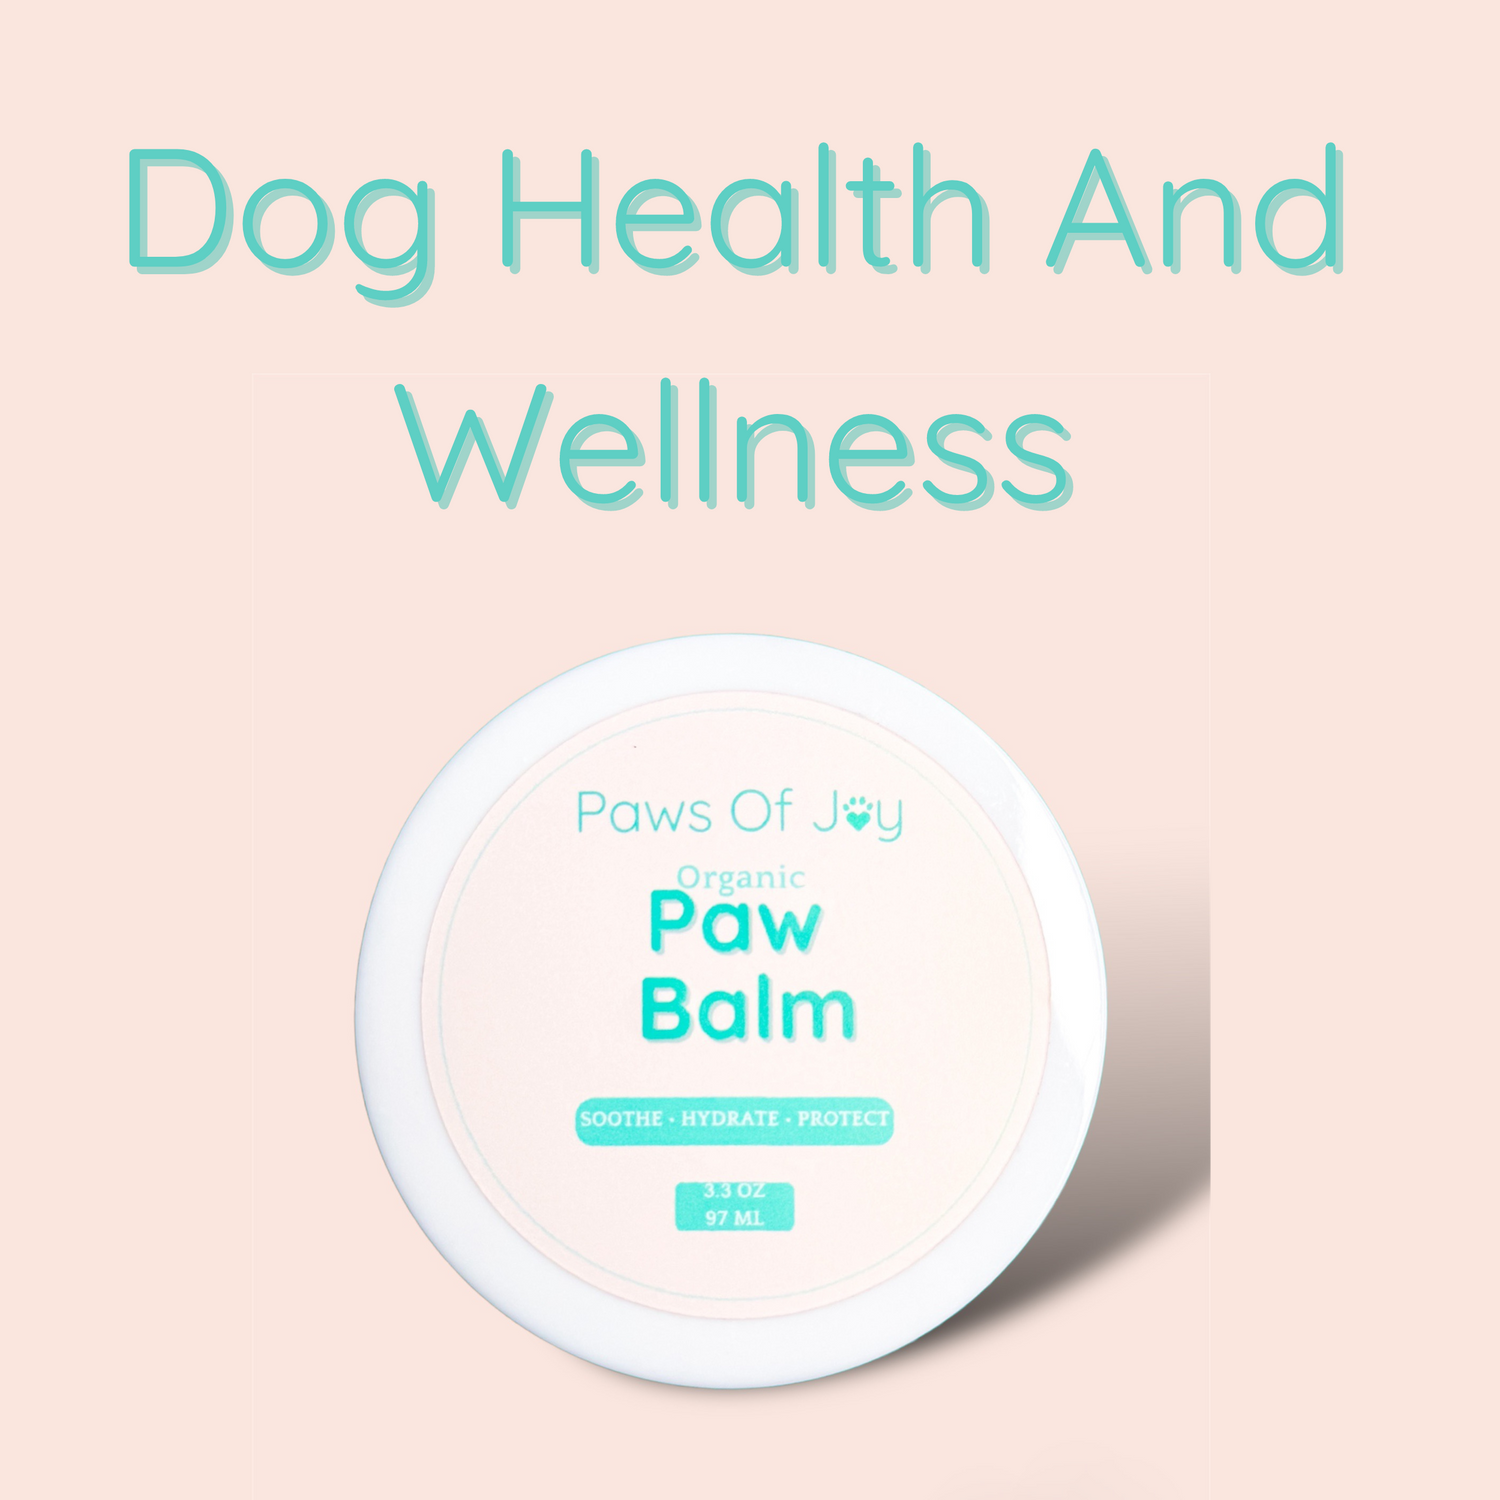 Dog Health And Wellness